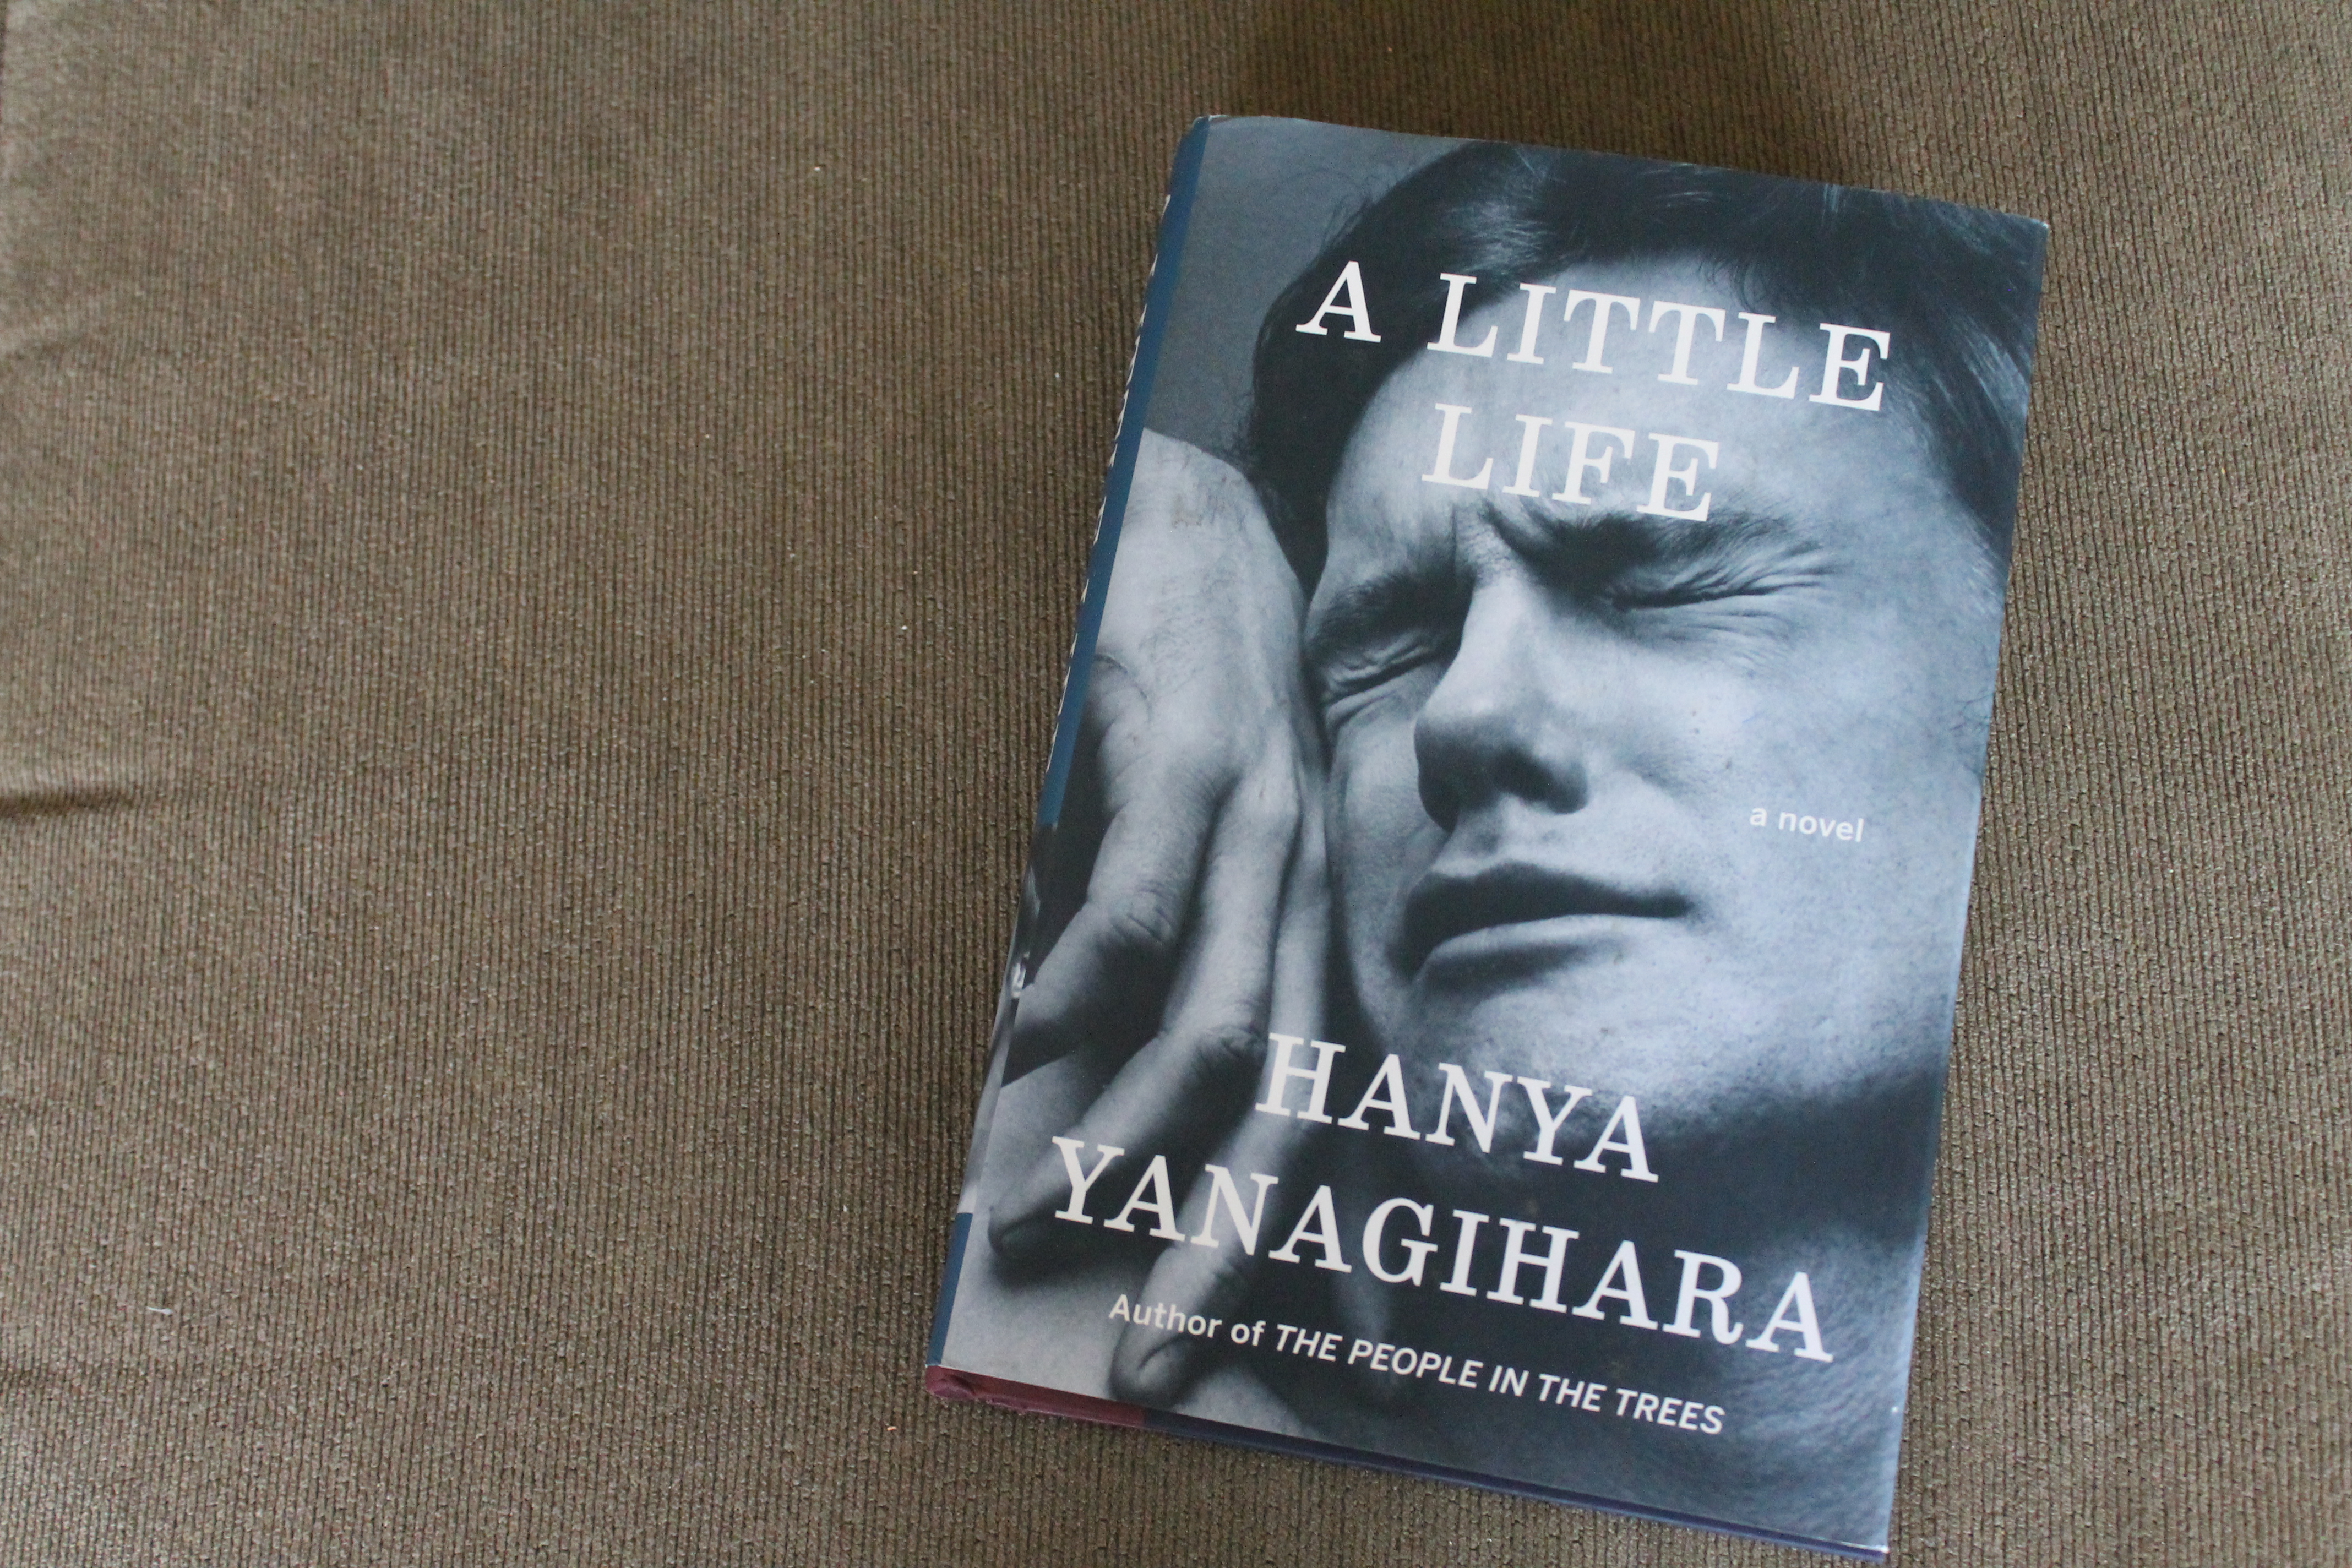 Little life книга. A little Life hanya Yanagihara.